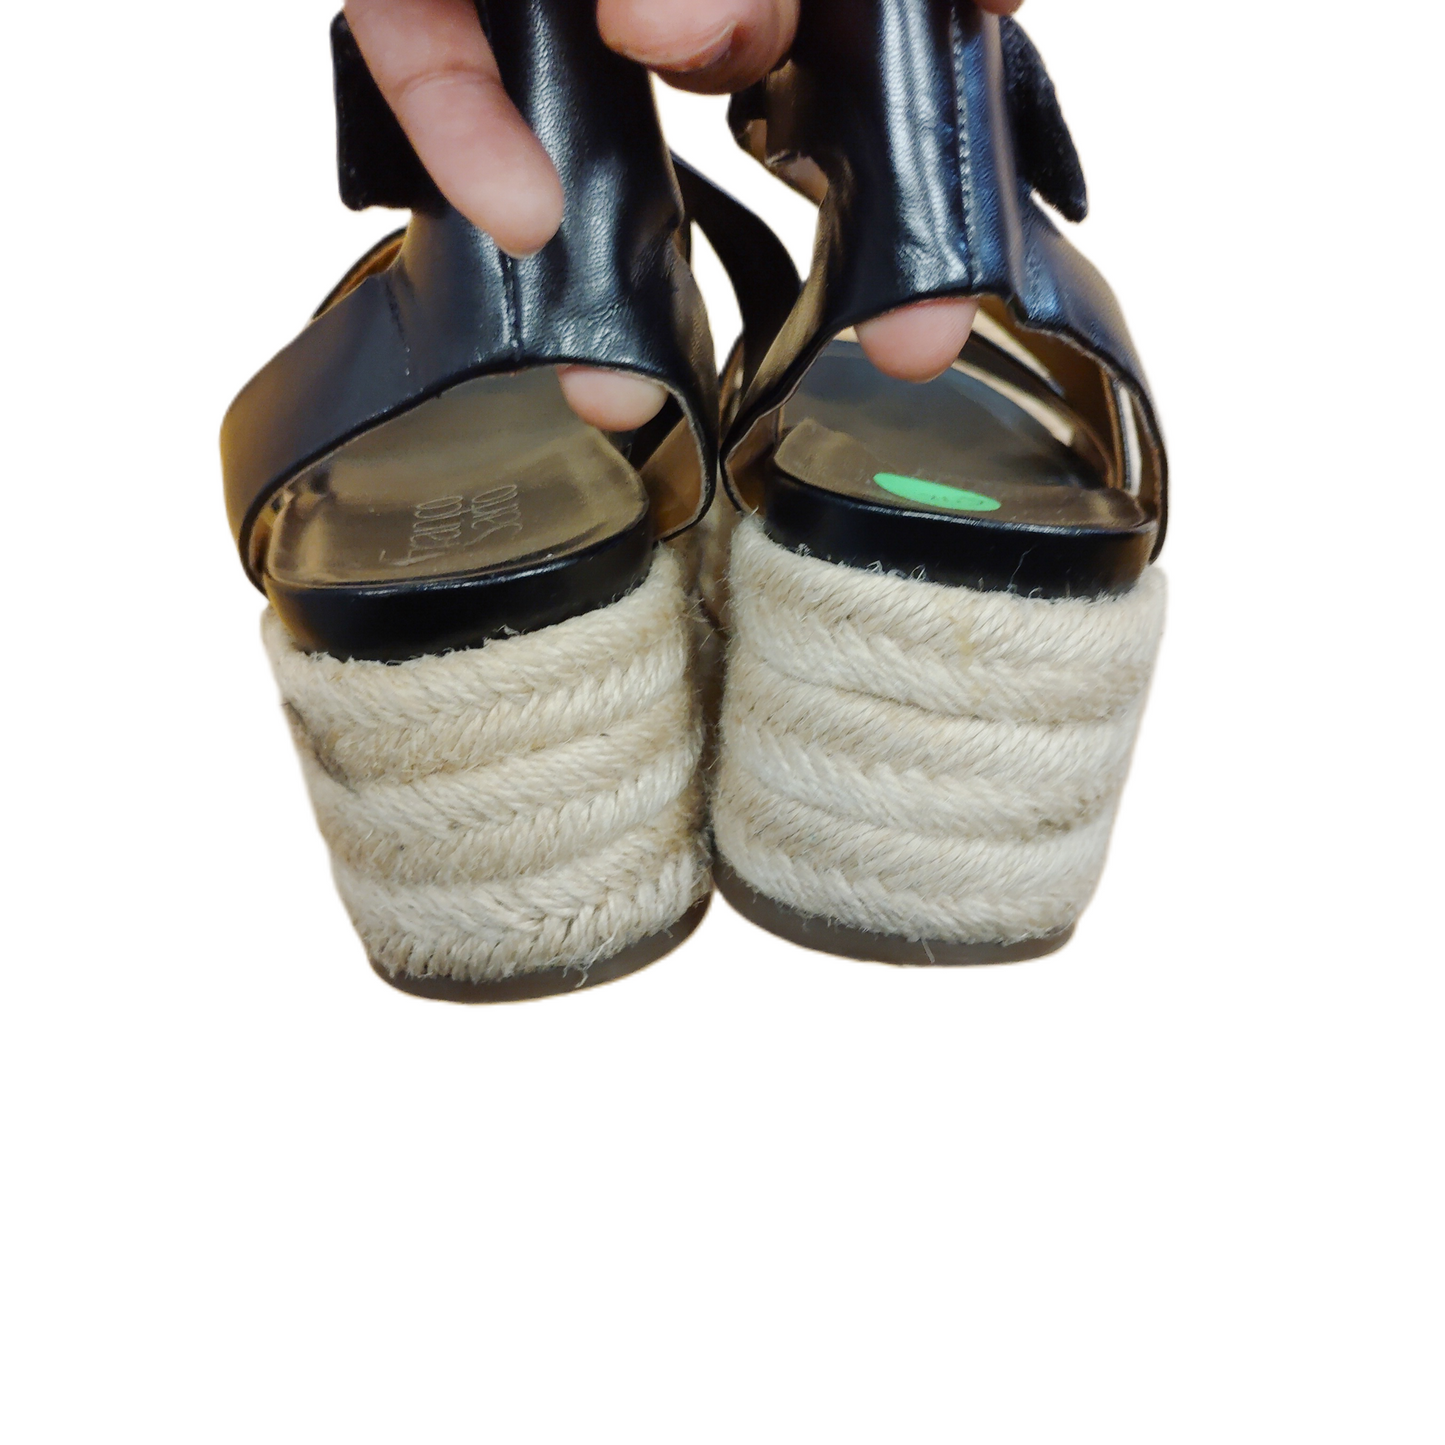 Black Sandals Heels Platform By Franco Sarto, Size: 6.5